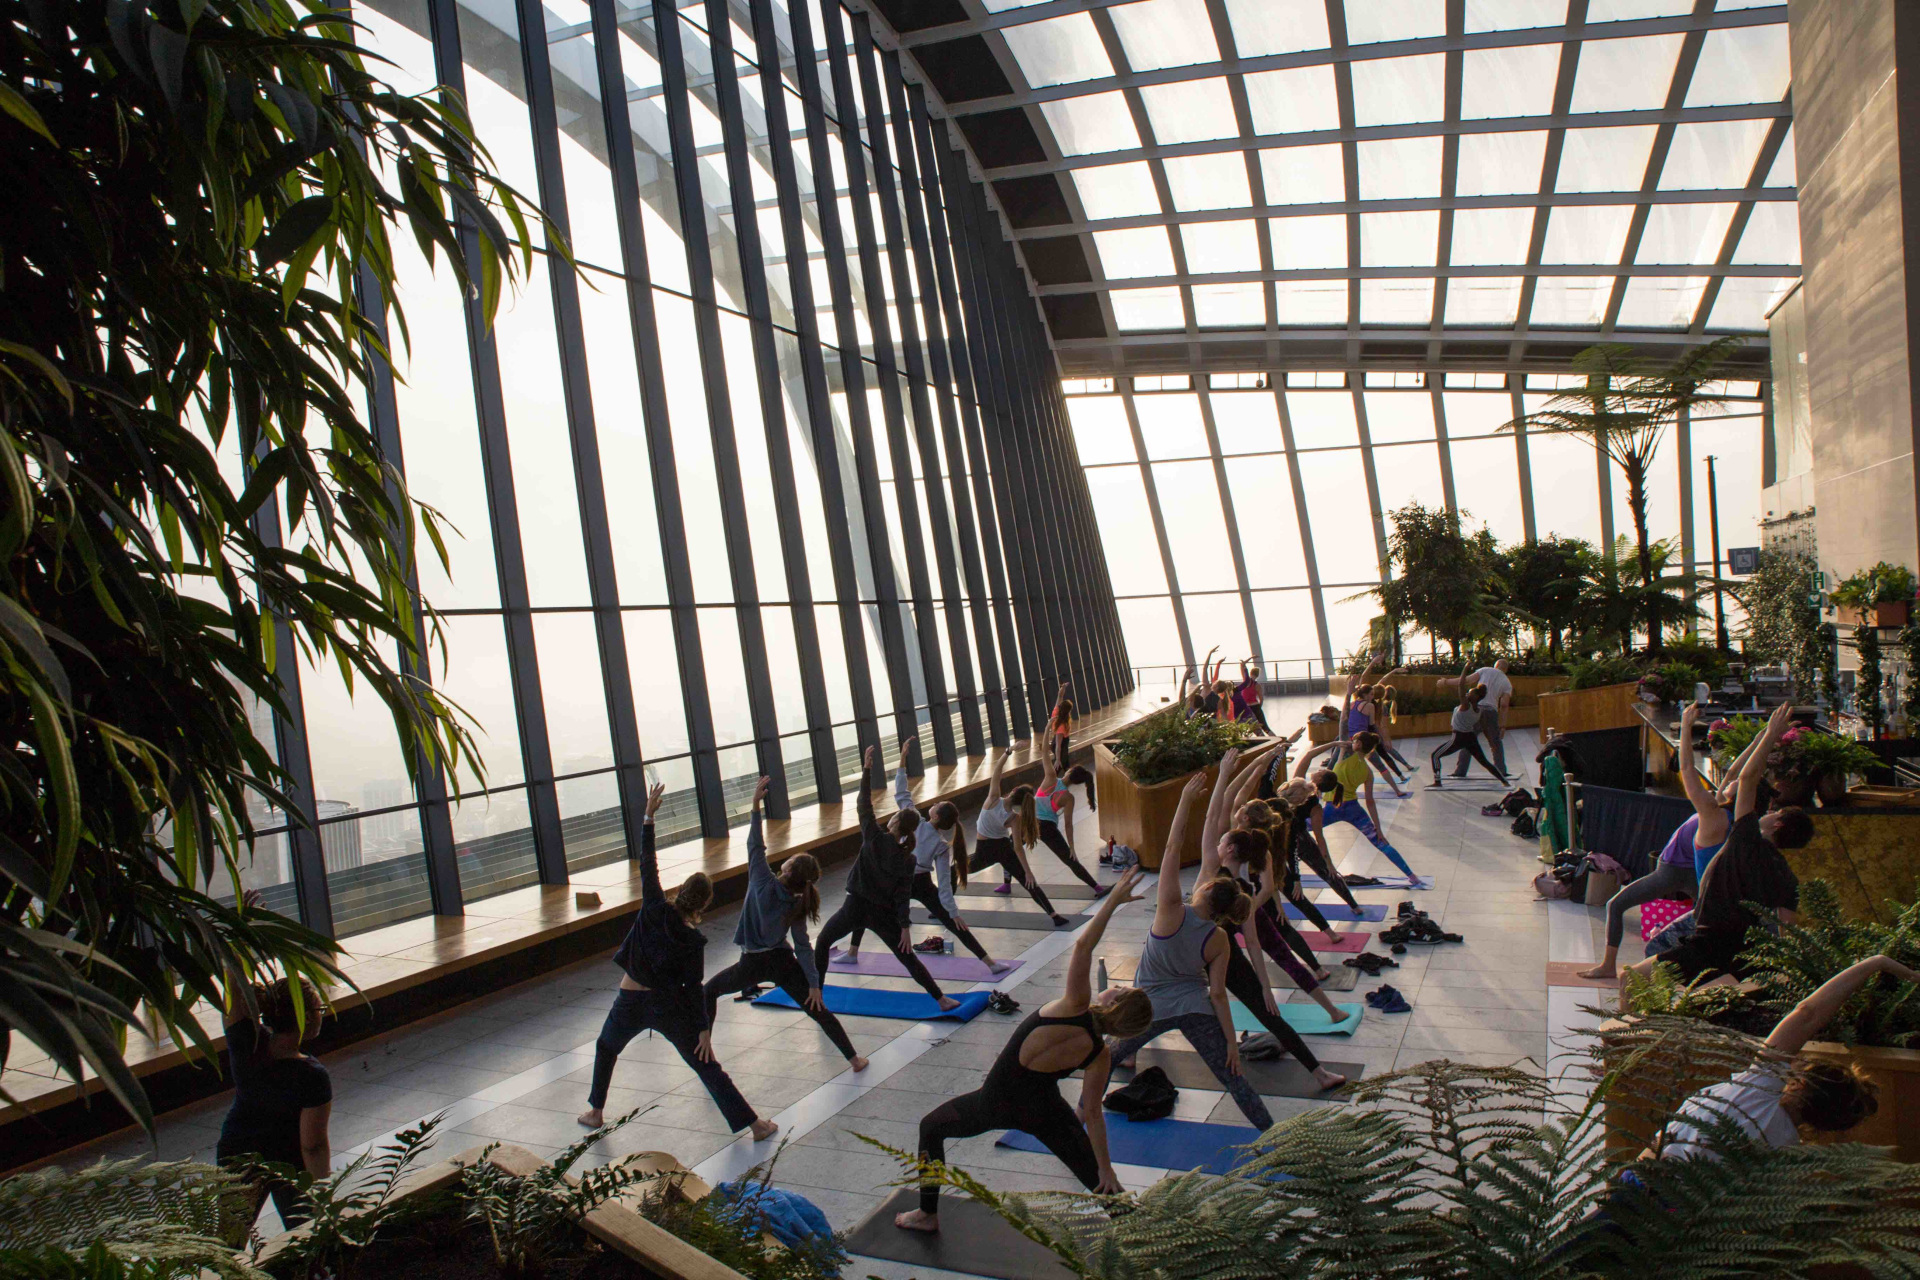 10 Of The Best Yoga Studios & Classes In London